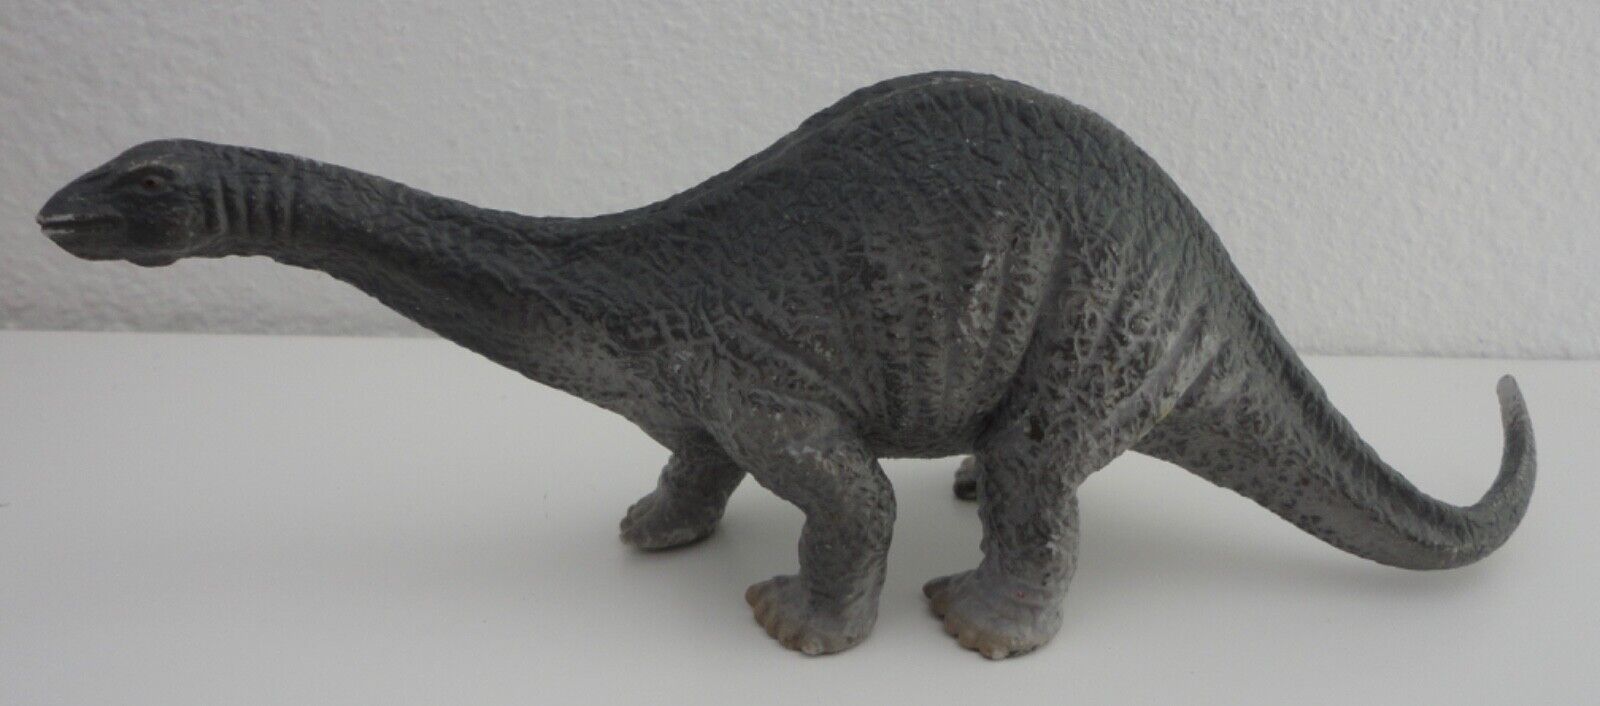 2002 Schleich Apatosaurus Plastic Dinosaur Figure